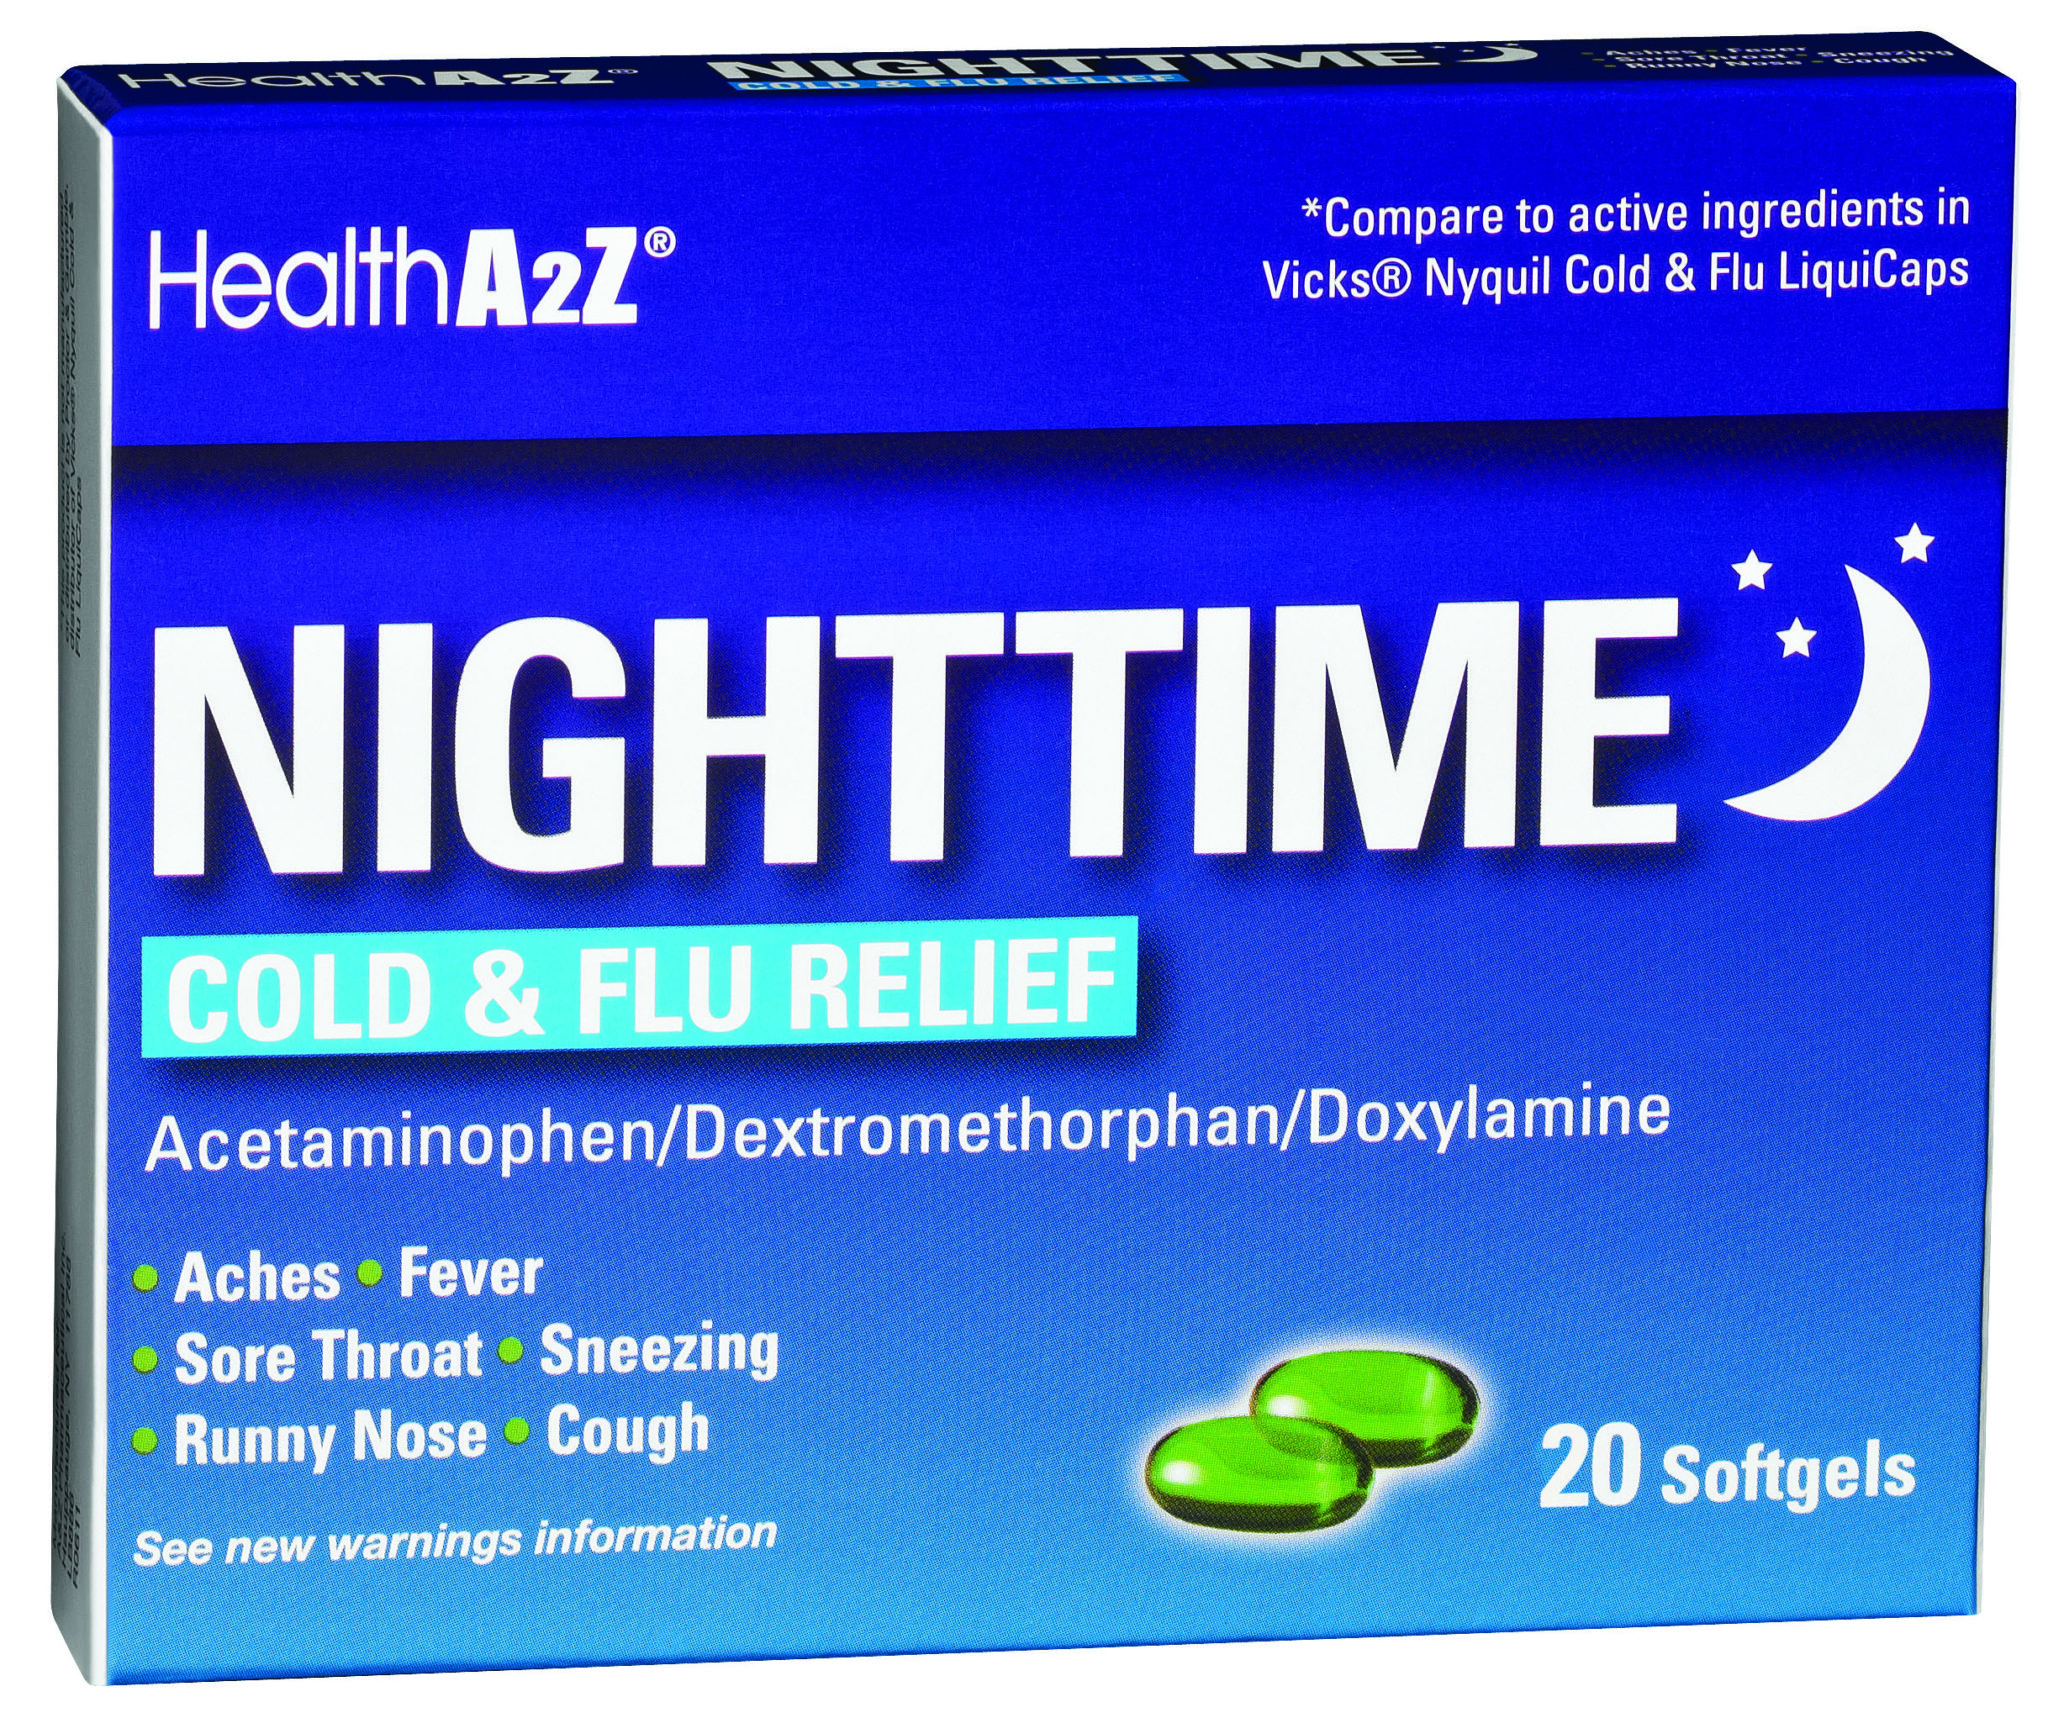 HealthA2Z® Nighttime Cold & Flu Relief